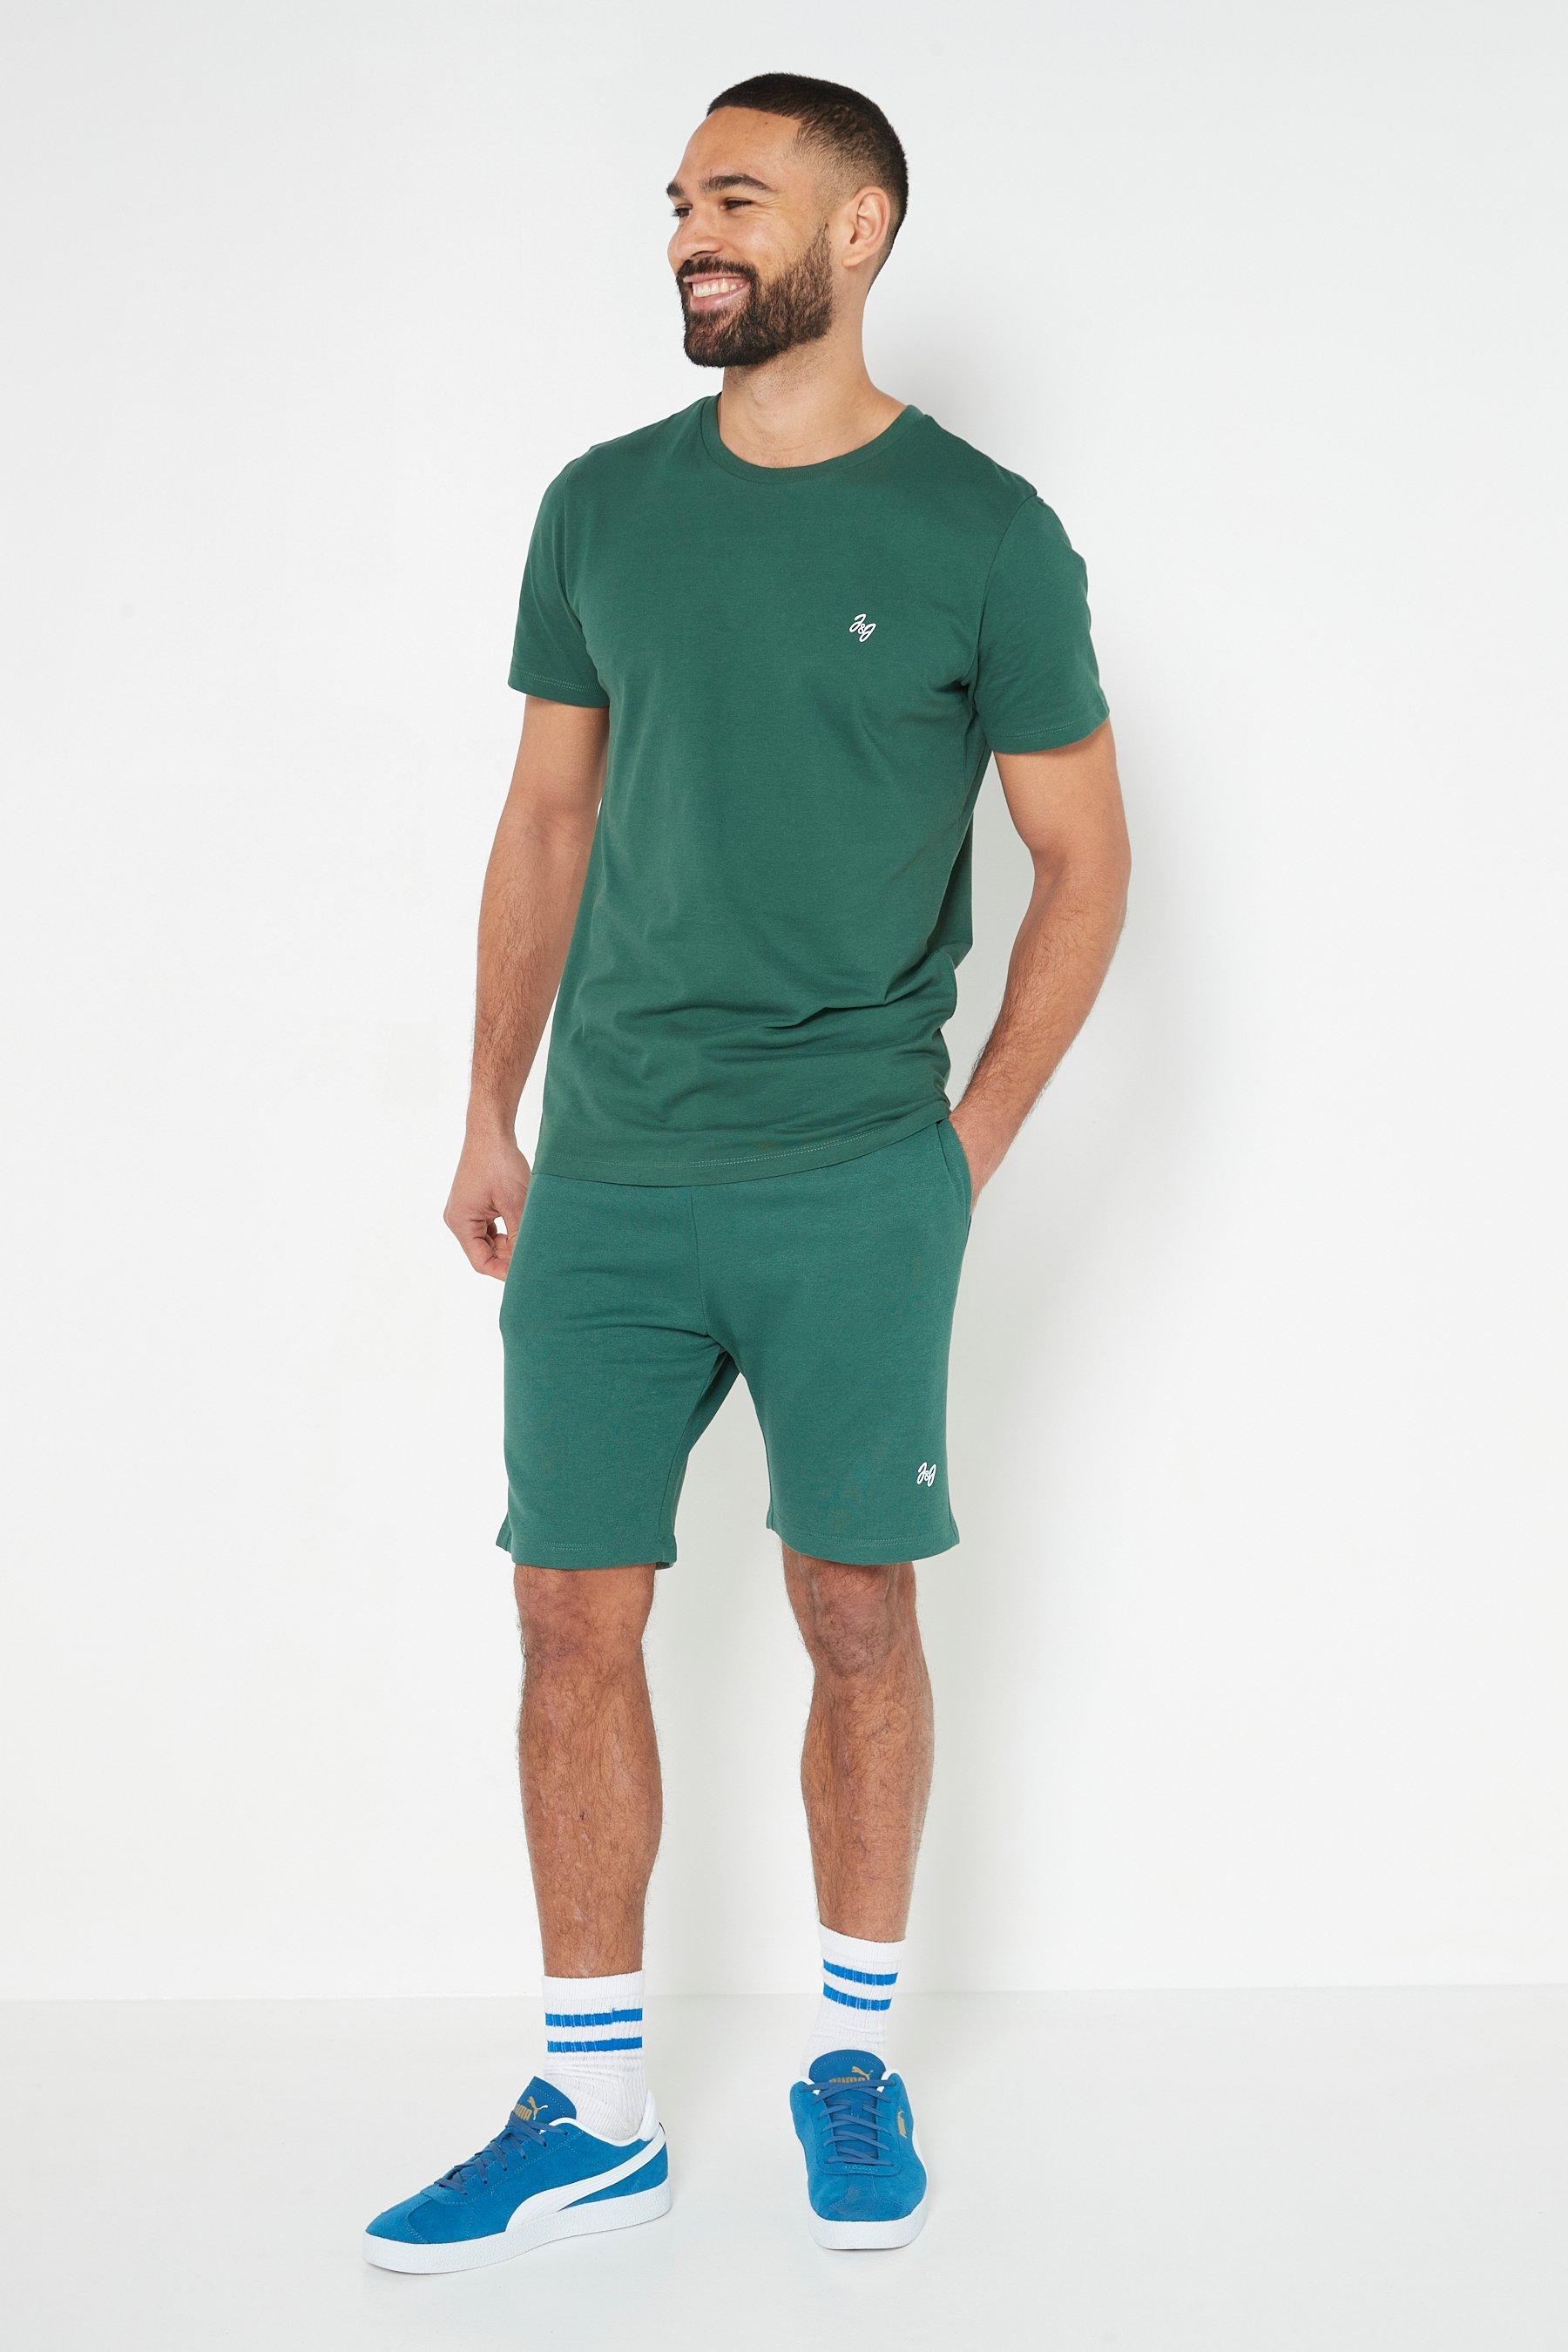 jack and jones joseph green t-shirt and shorts set - mens - size: small